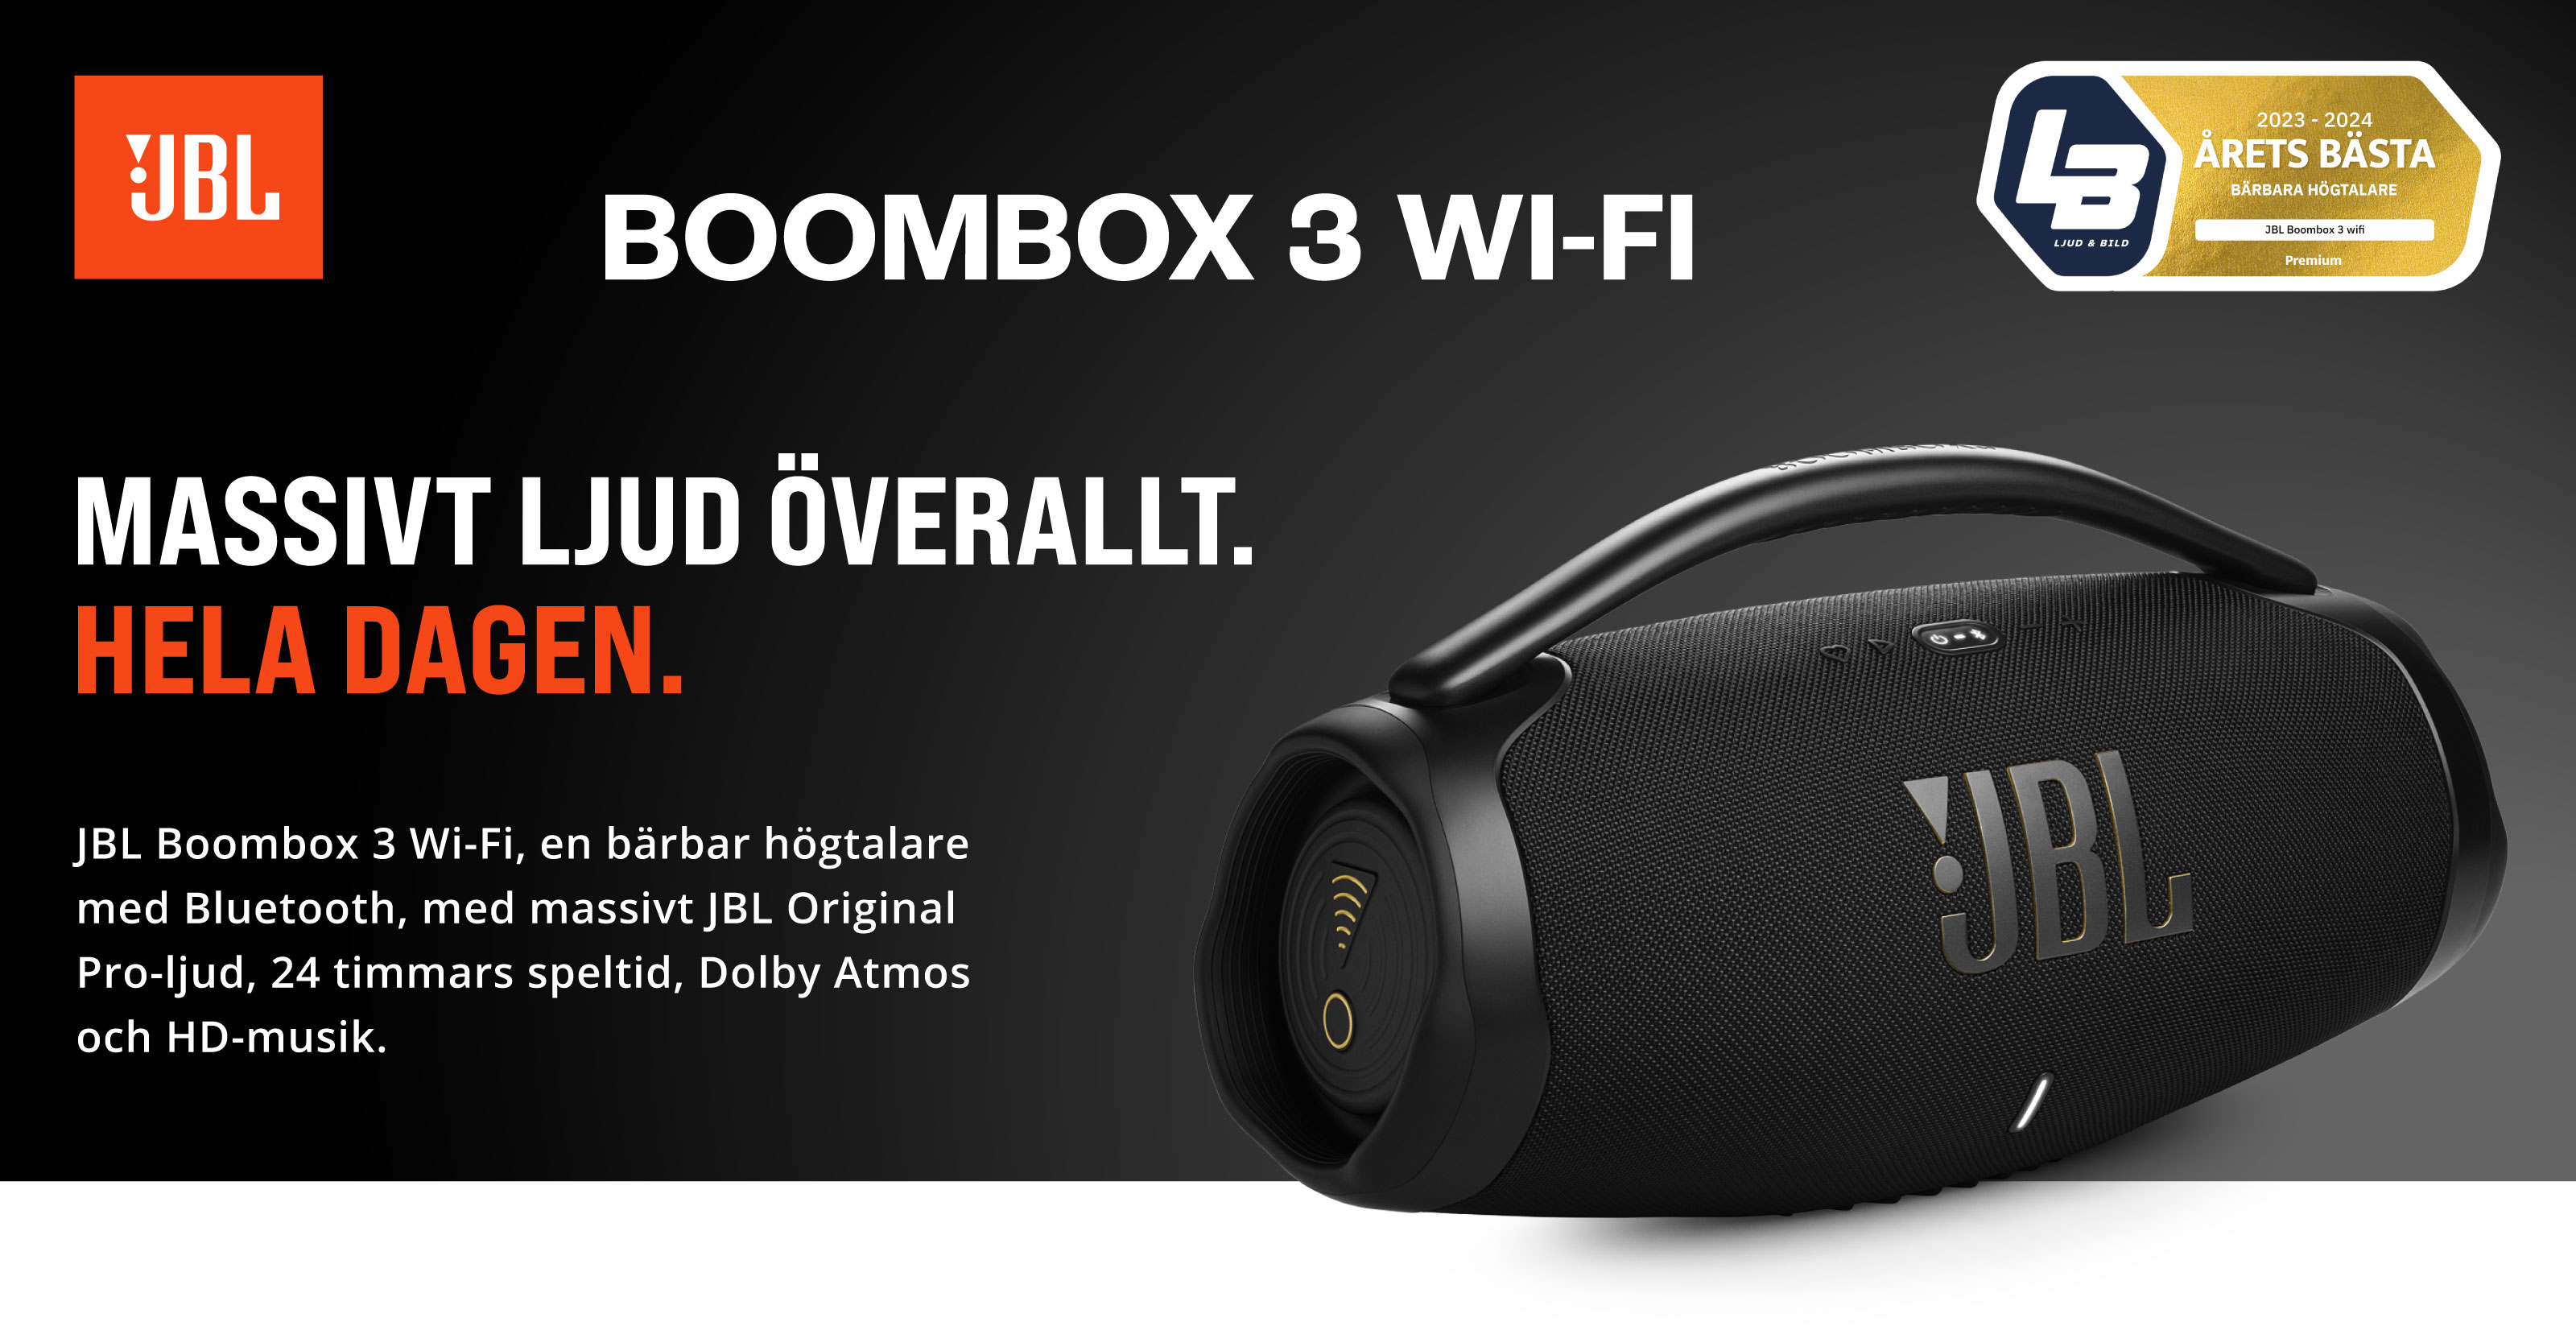 JBL Boombox 3 Wifi - big sound everywhere, all-day long